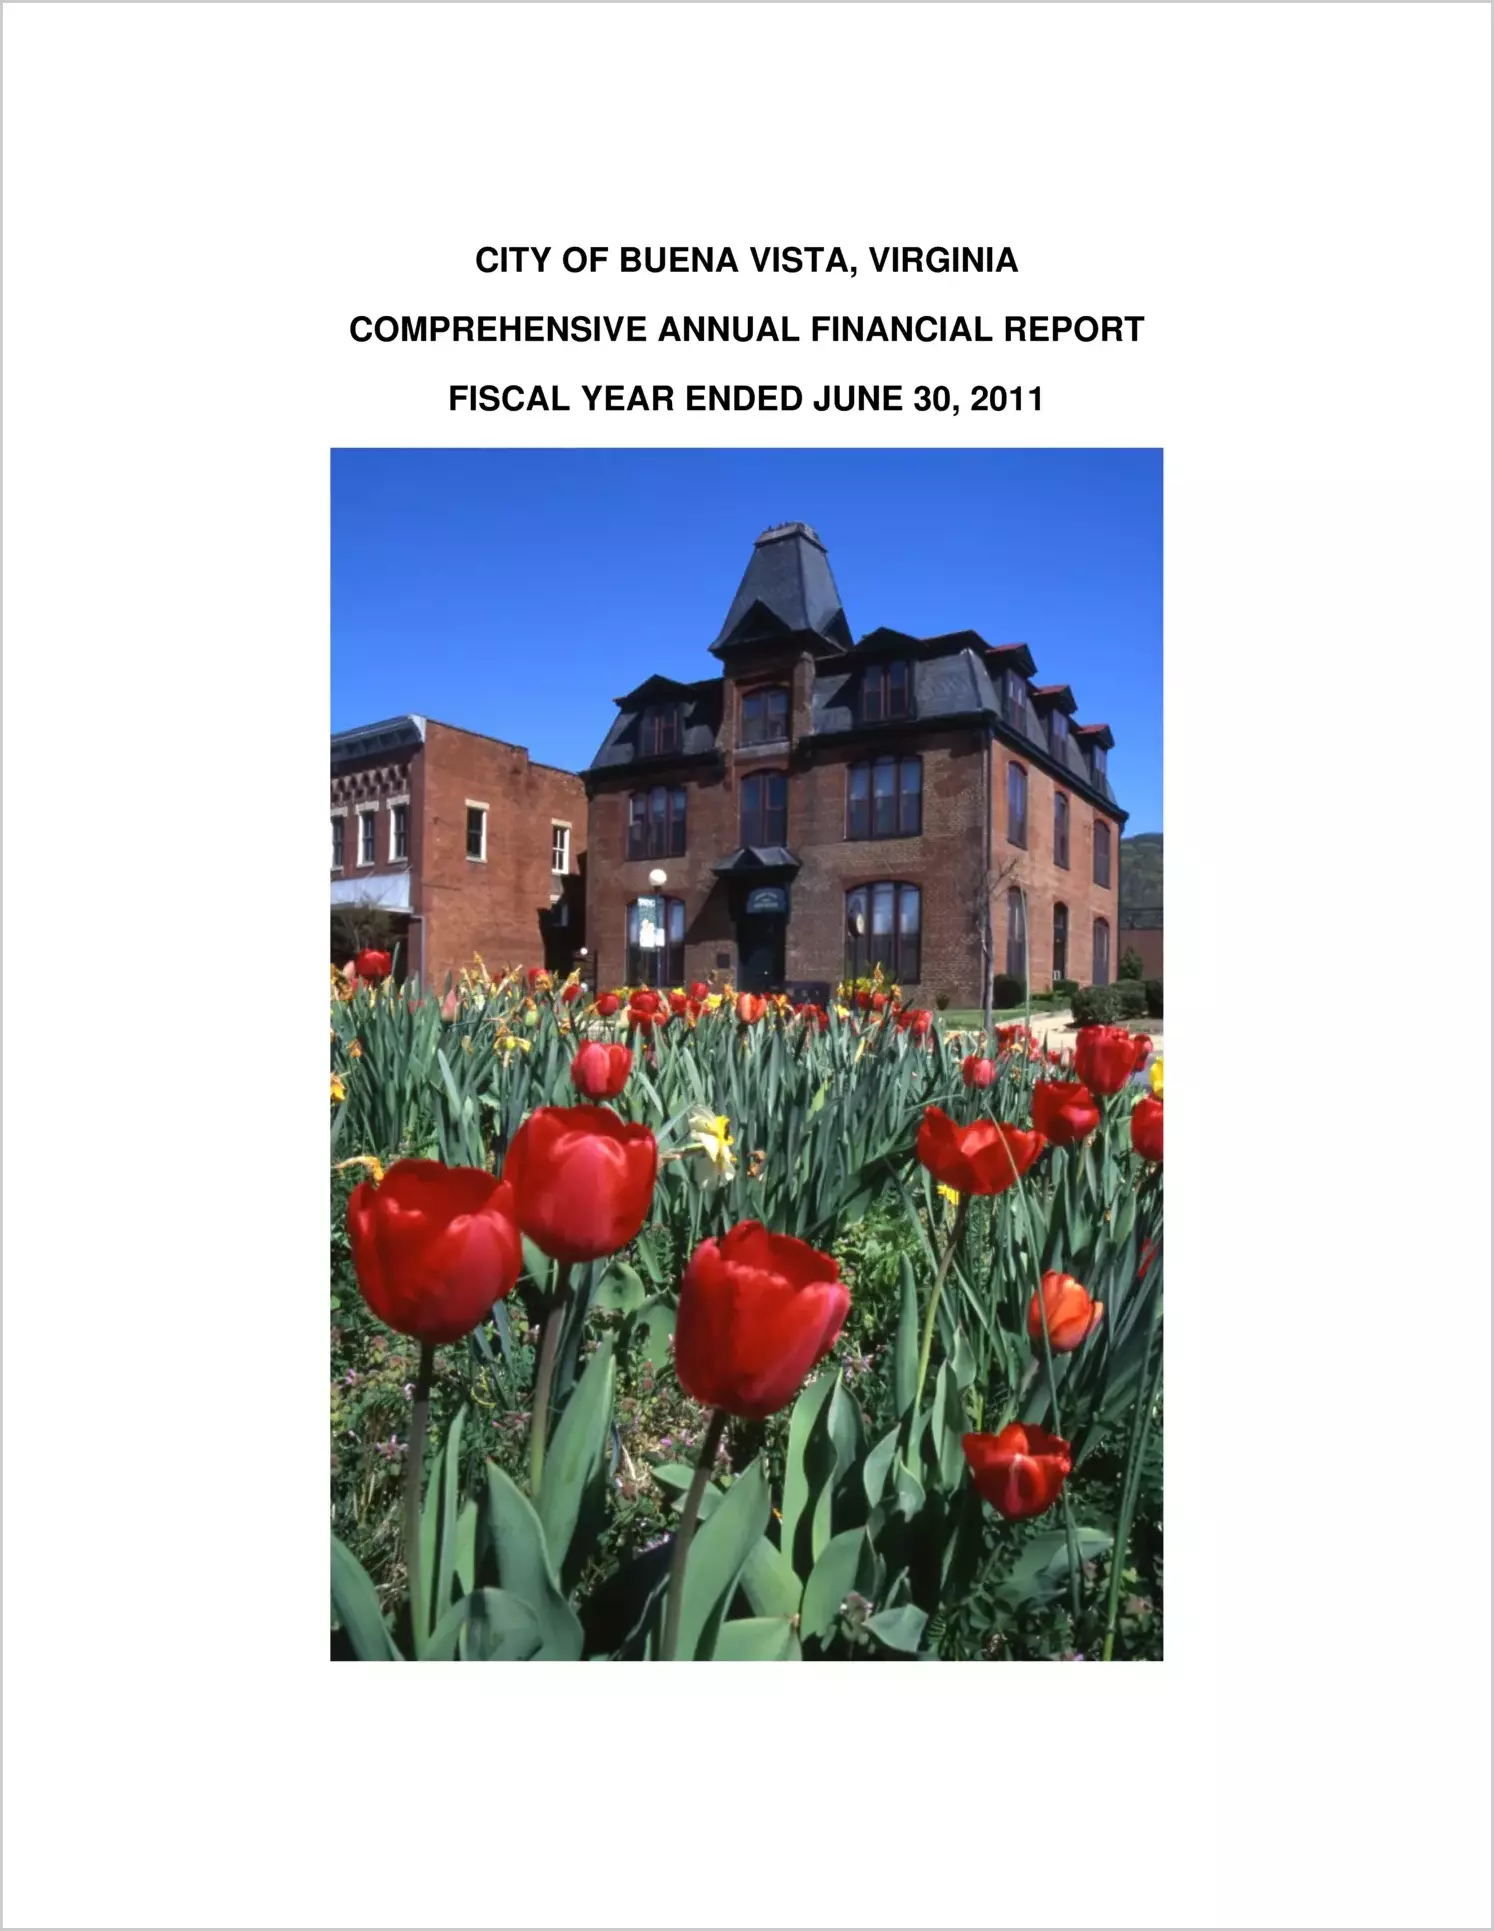 2011 Annual Financial Report for City of Buena Vista